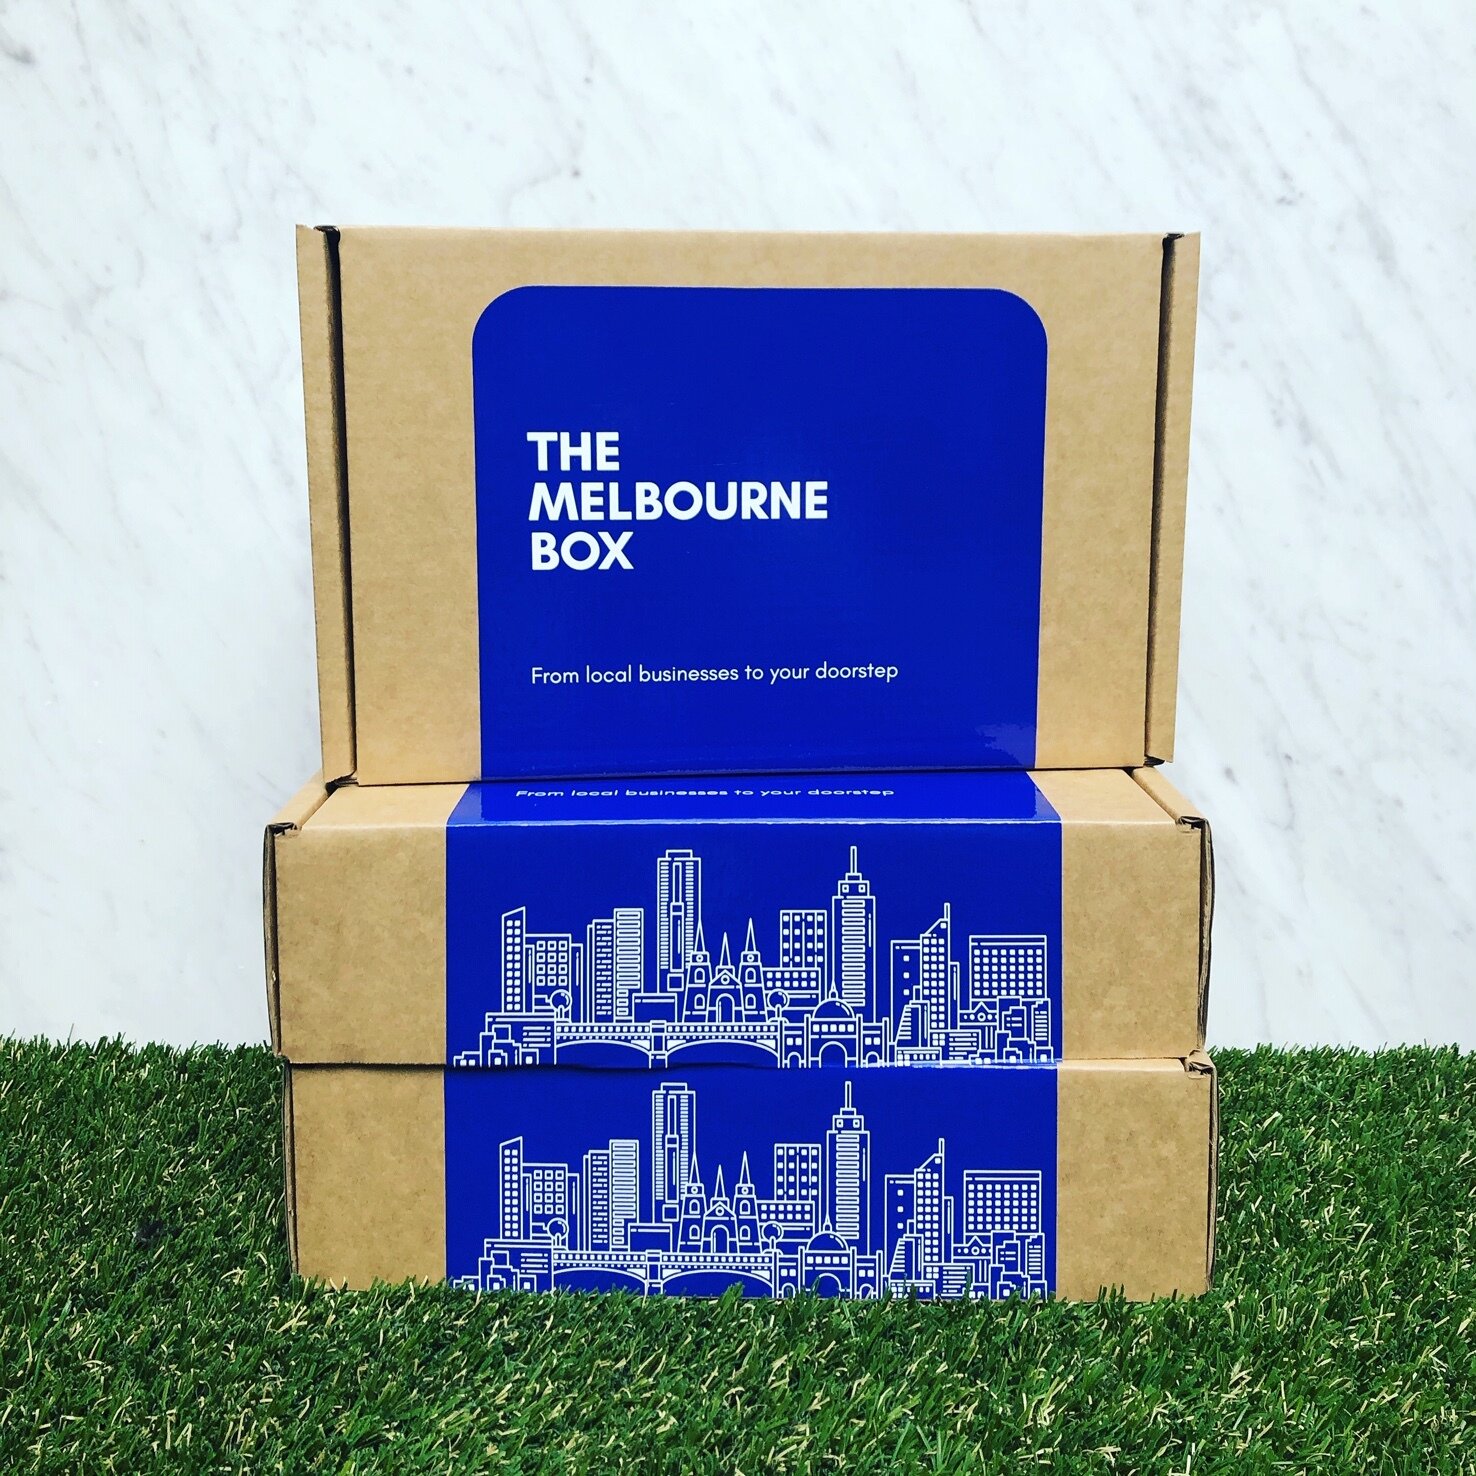 Image: The Melbourne Box